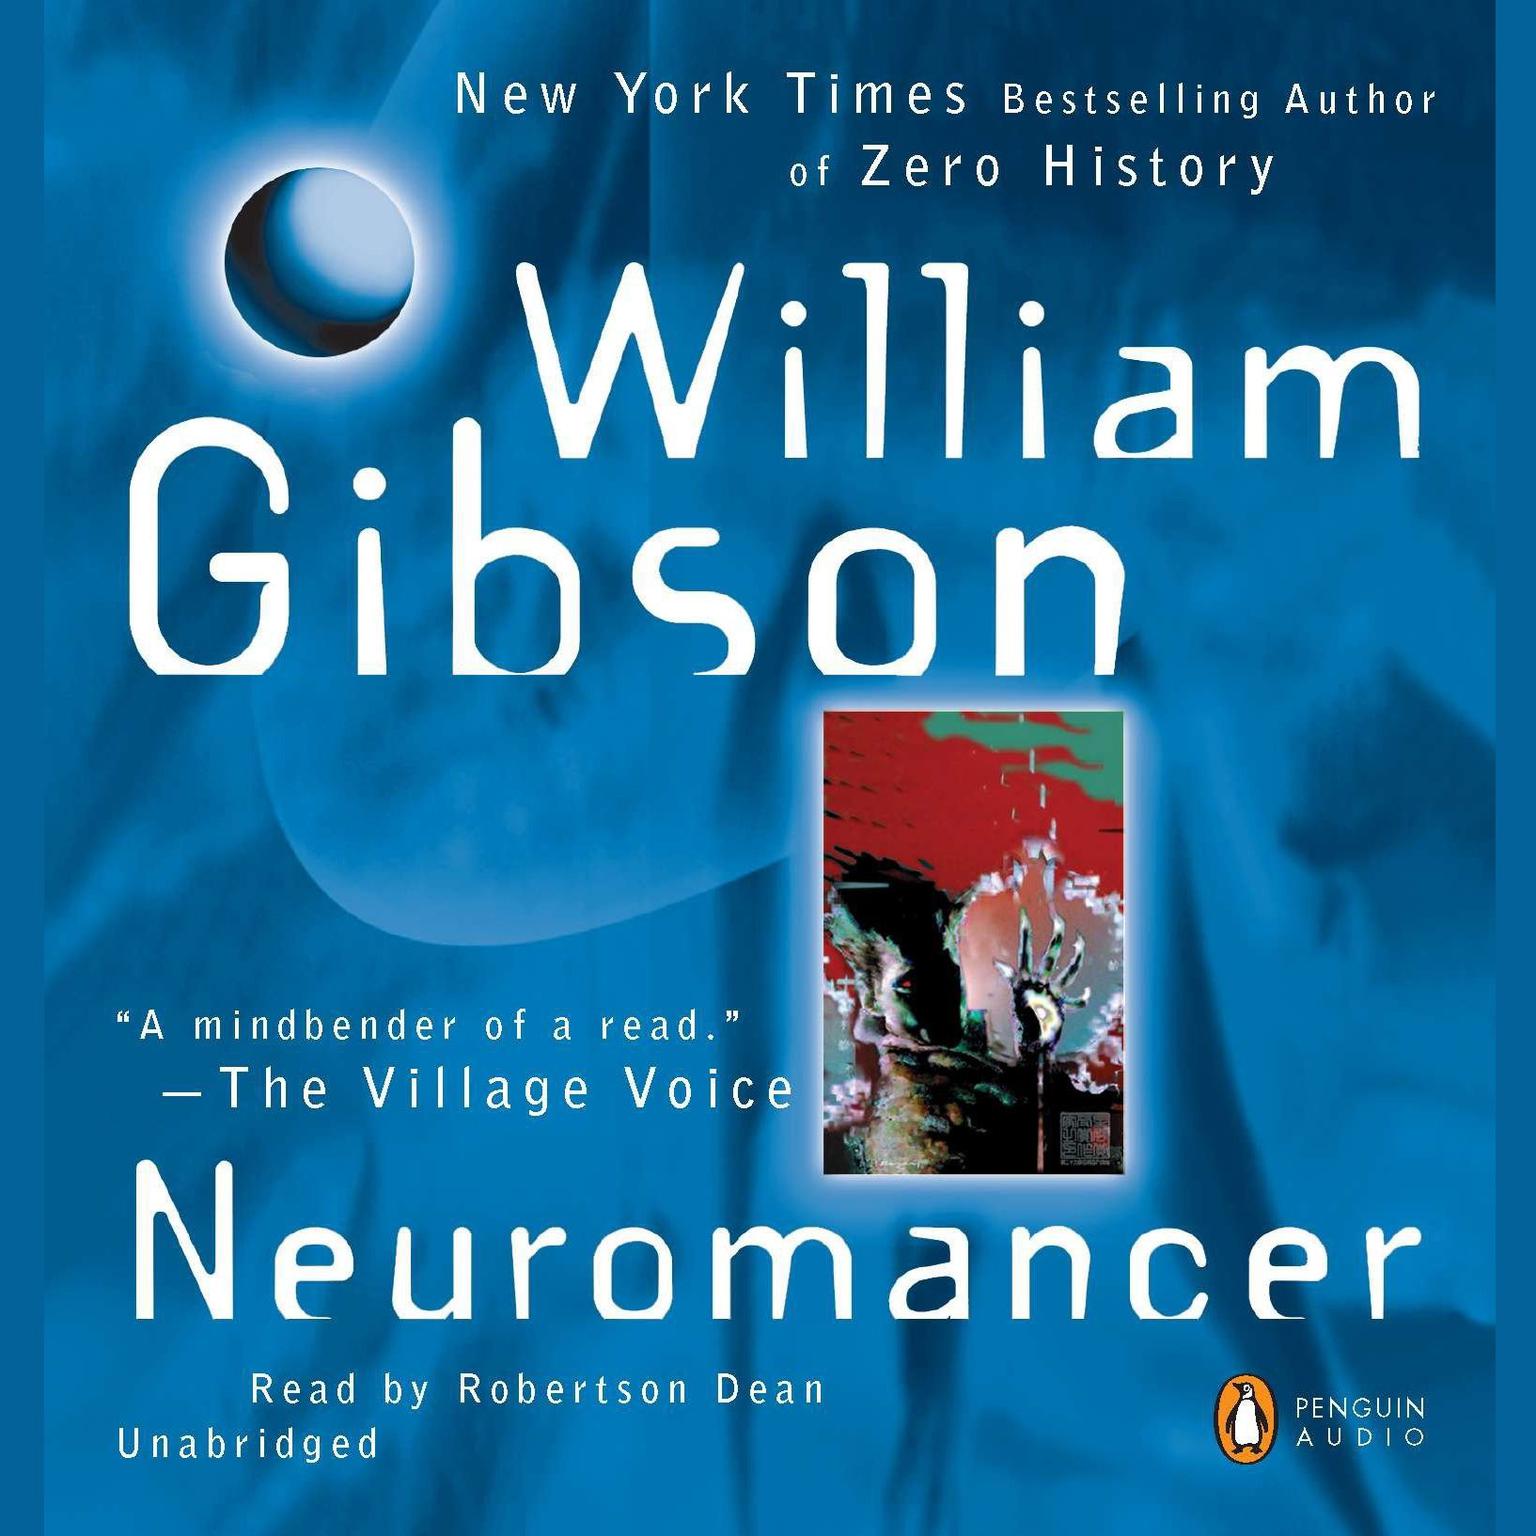 William Gibson: Neuromancer (AudiobookFormat, 2011, Penguin Audio)